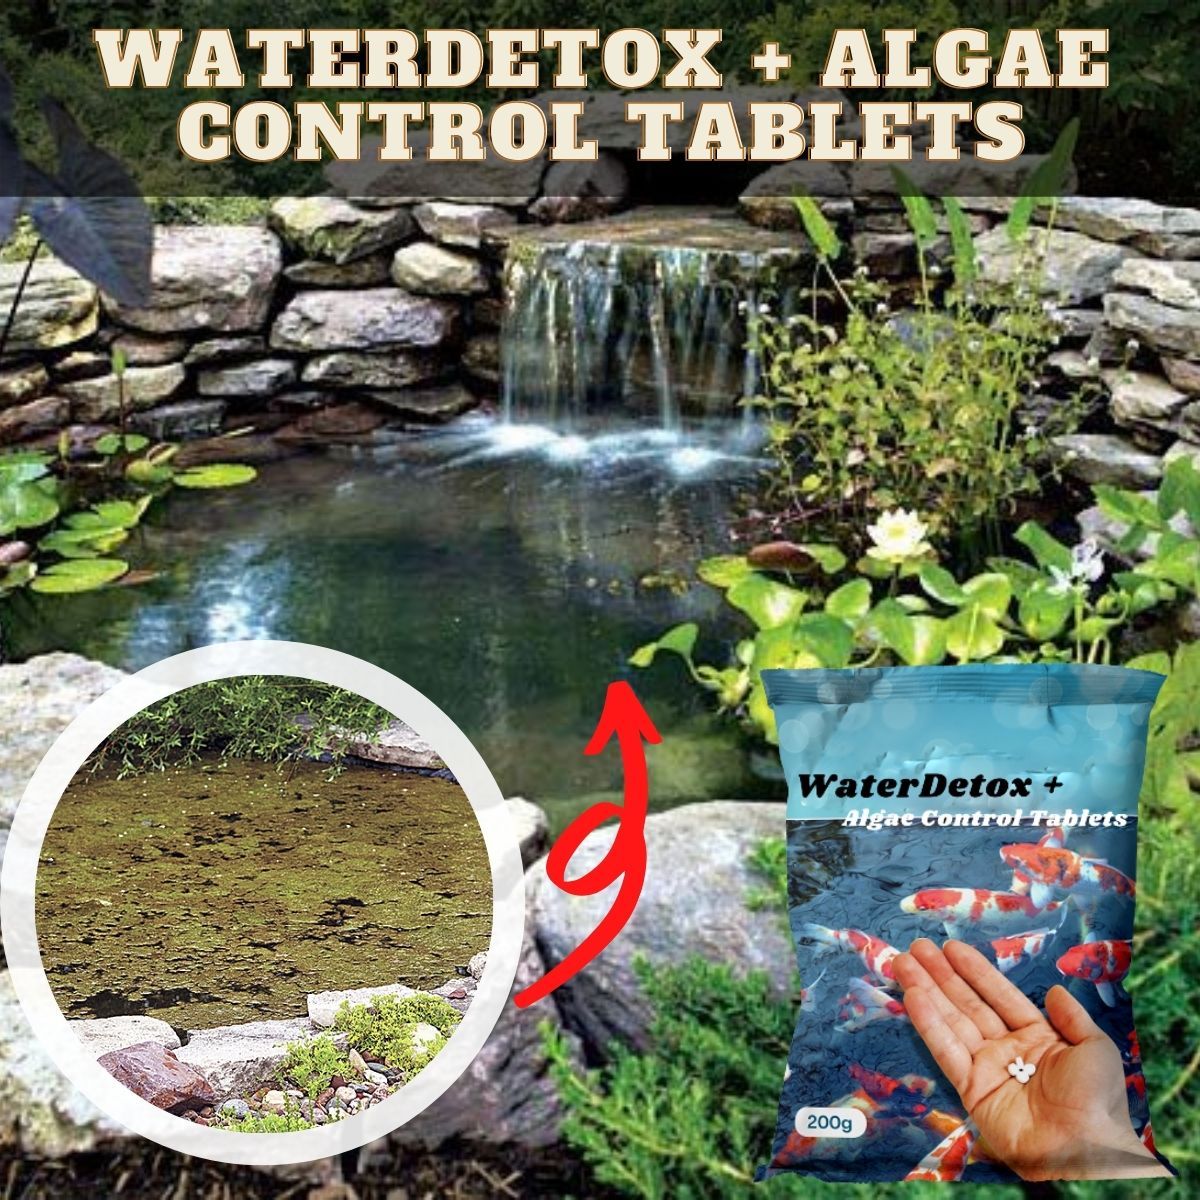 WaterDetox + Algae Control Tablets